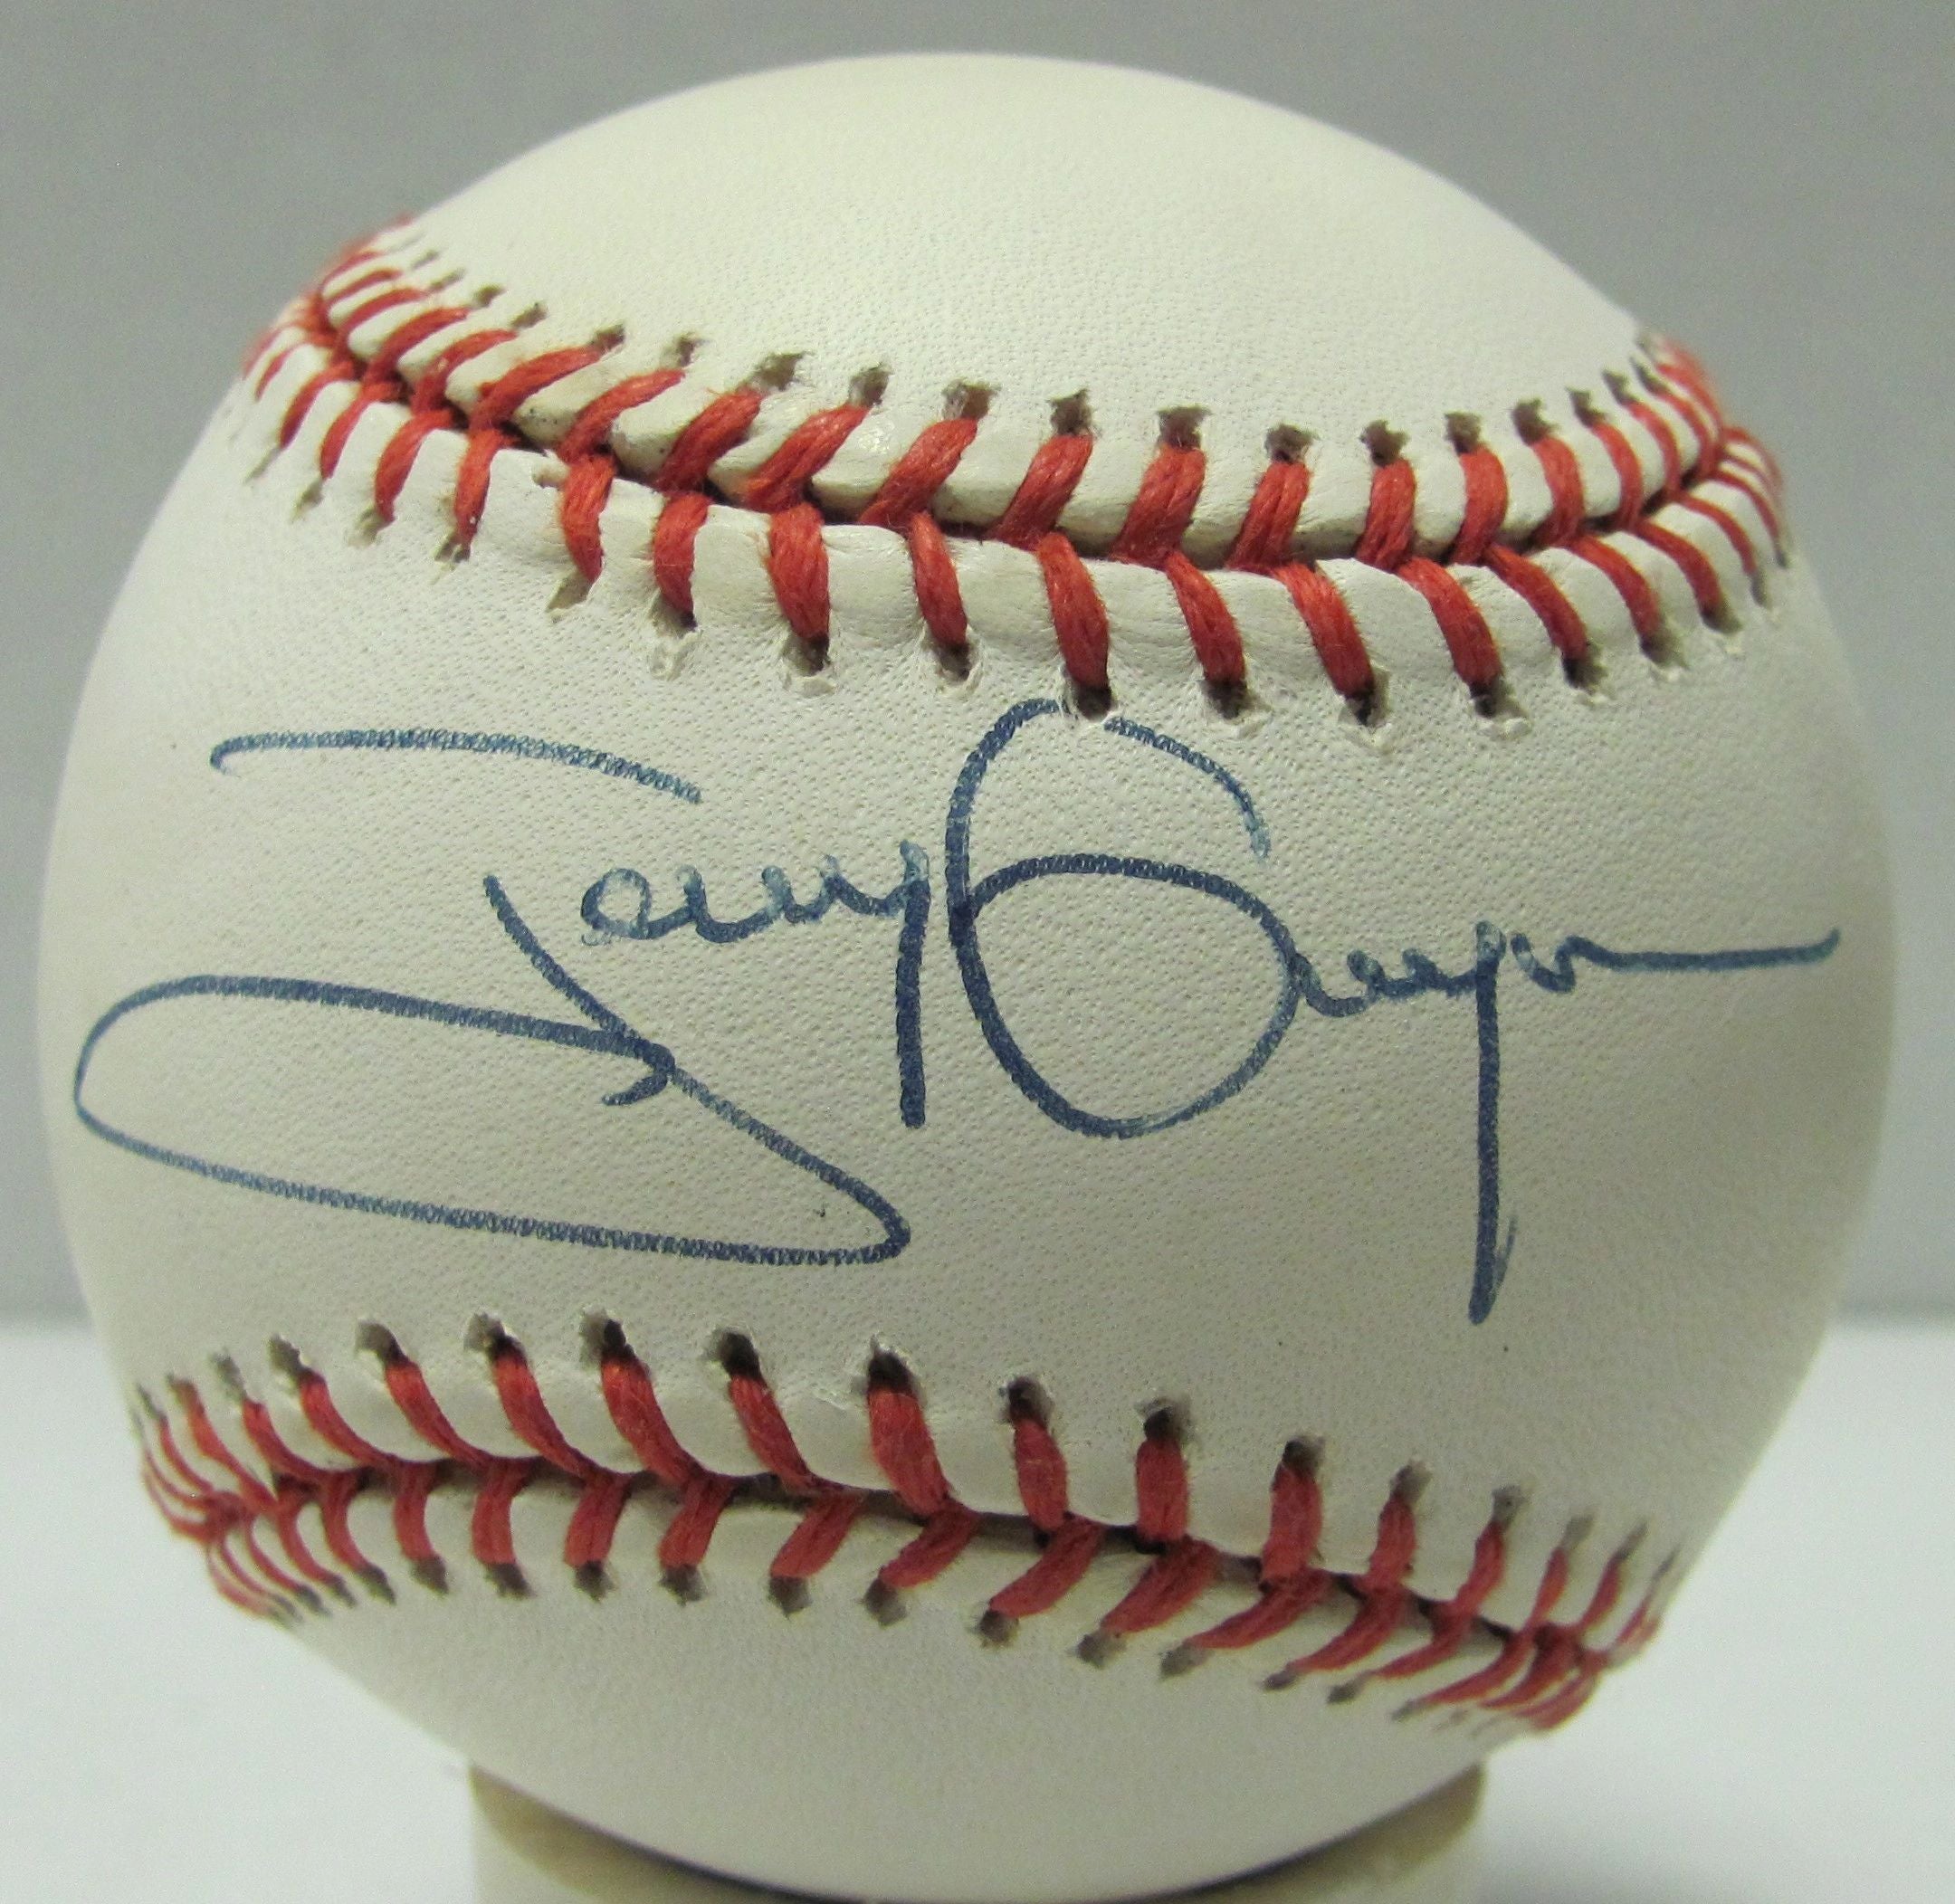 Tony Gwynn Signed Baseball - Official Ball National League Leonard Coleman San Diego Padres W/JSA COA